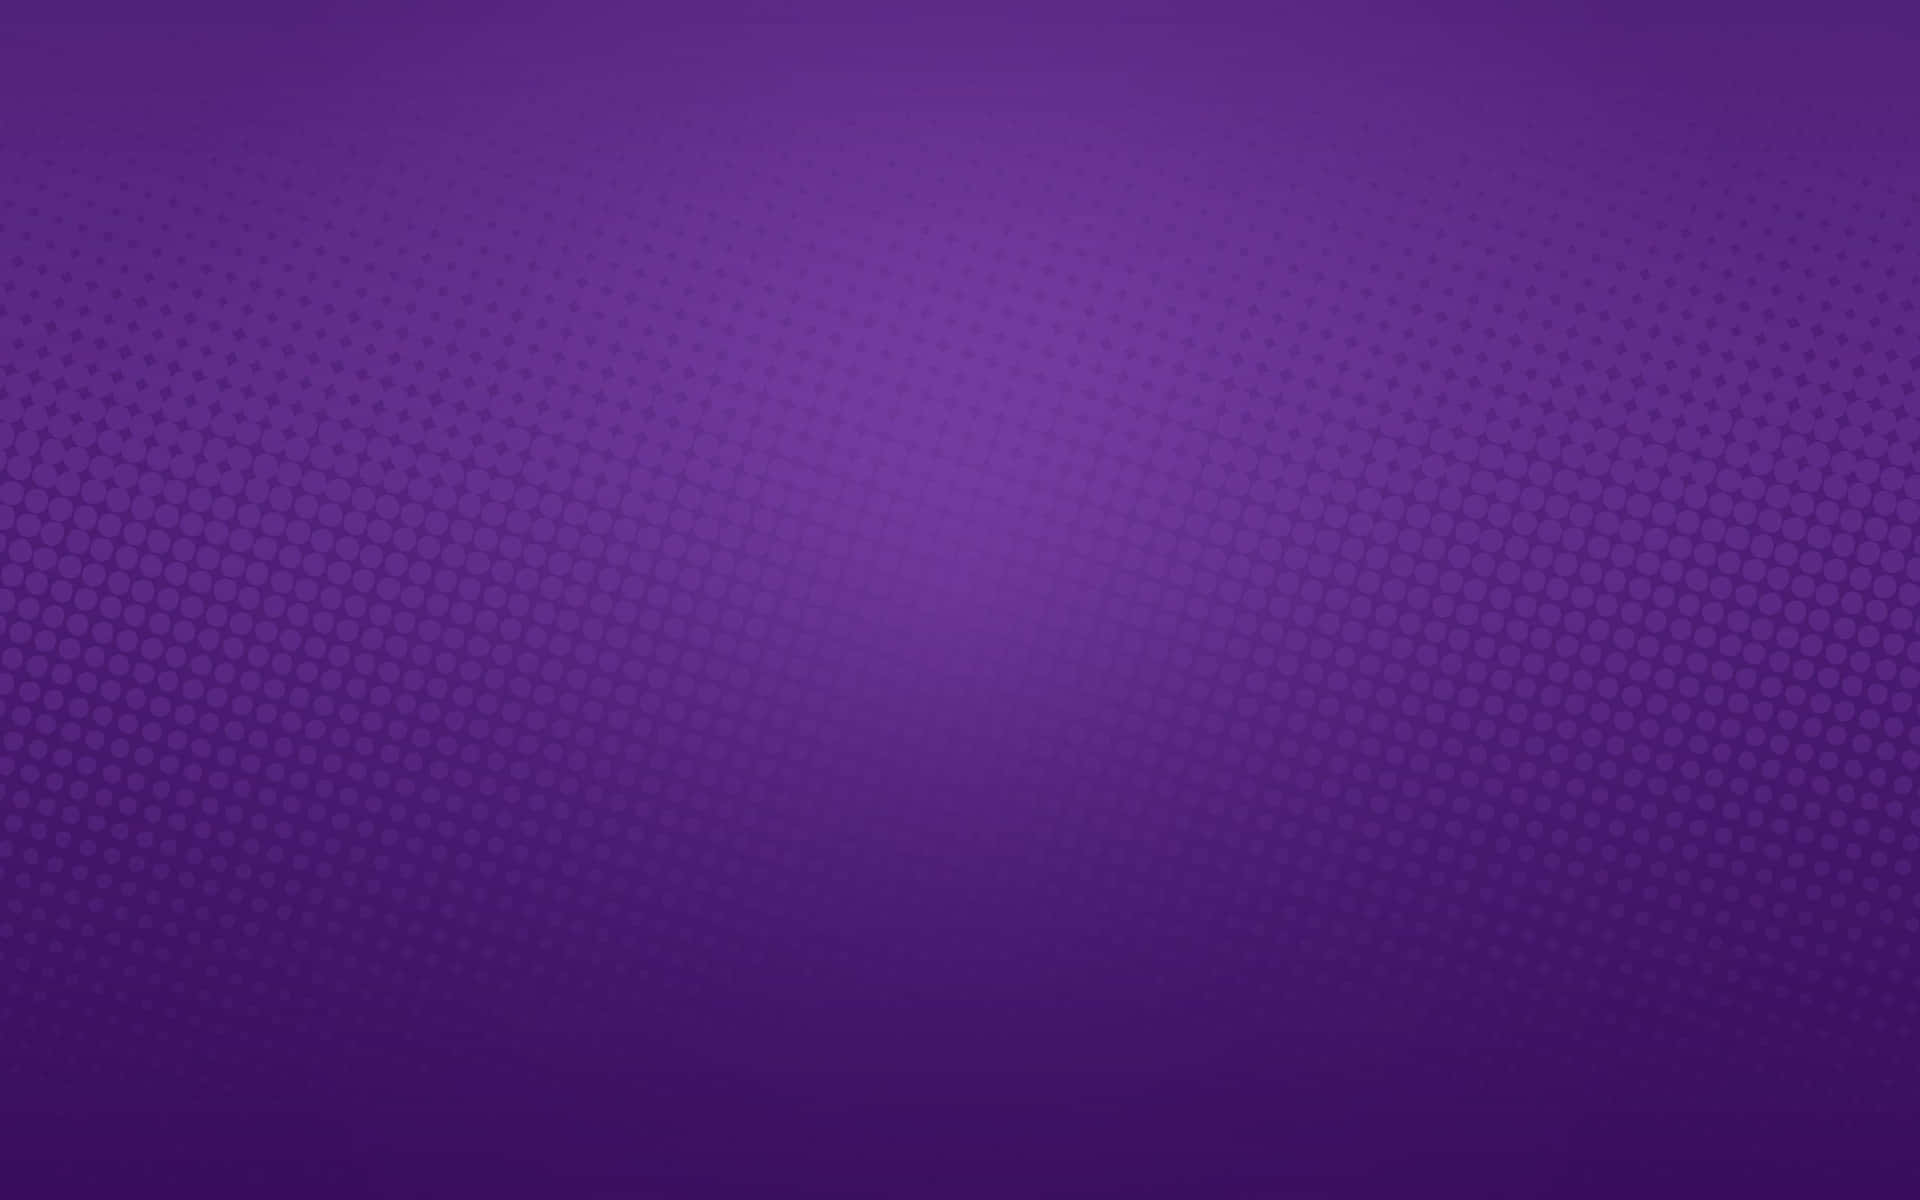 Vibrant Solid Purple Background